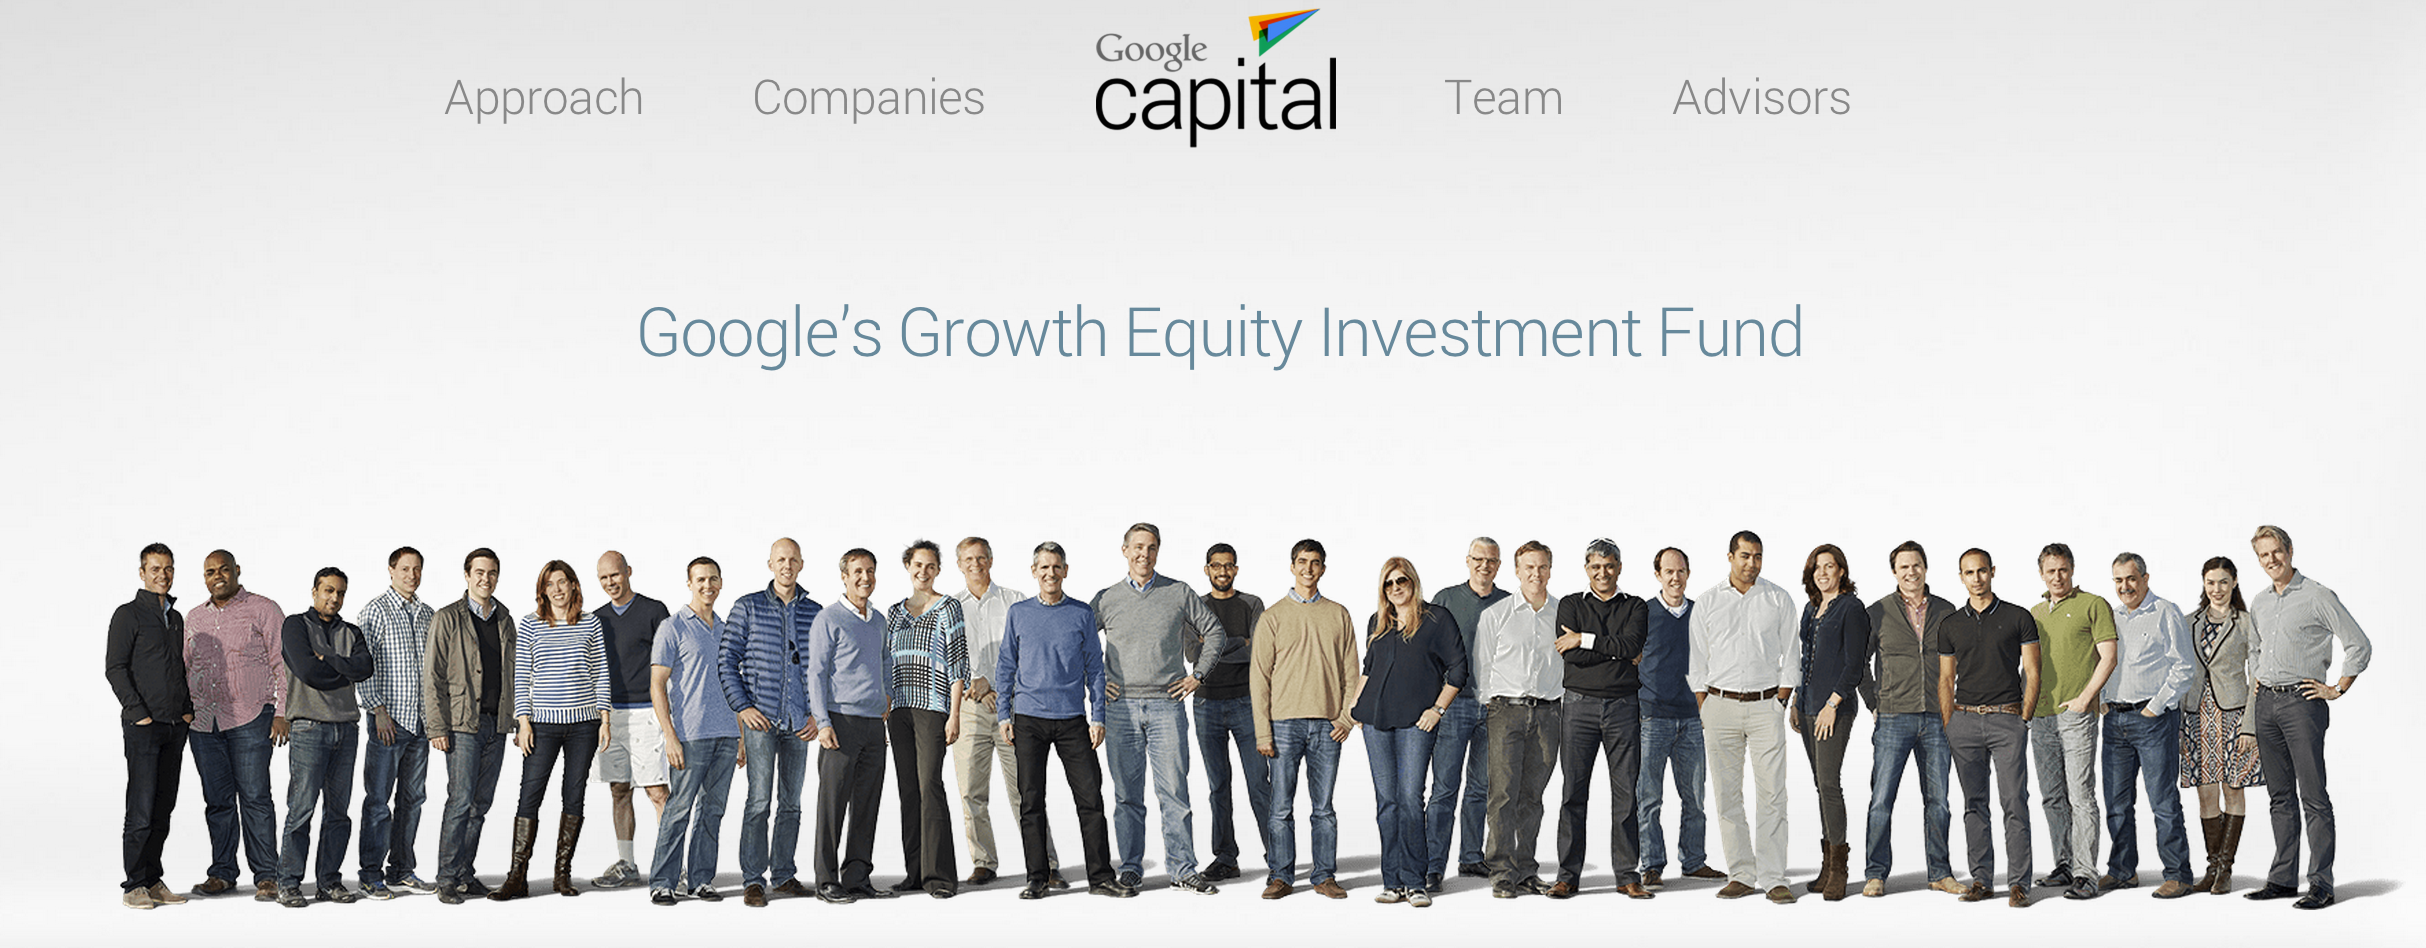 Google_Capital